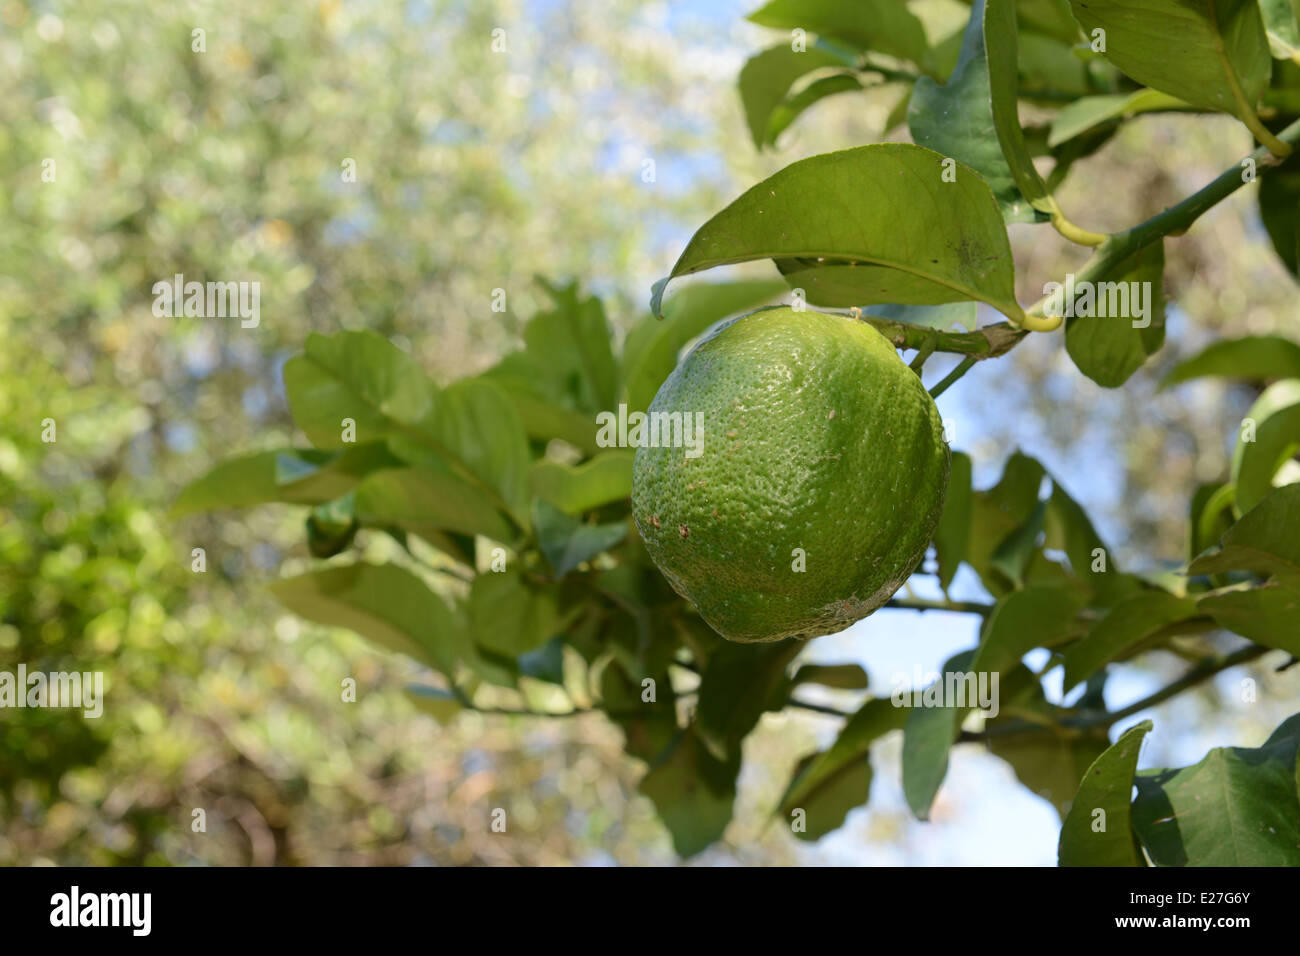 Lemon lemons growing tree trees Italy Stock Photo